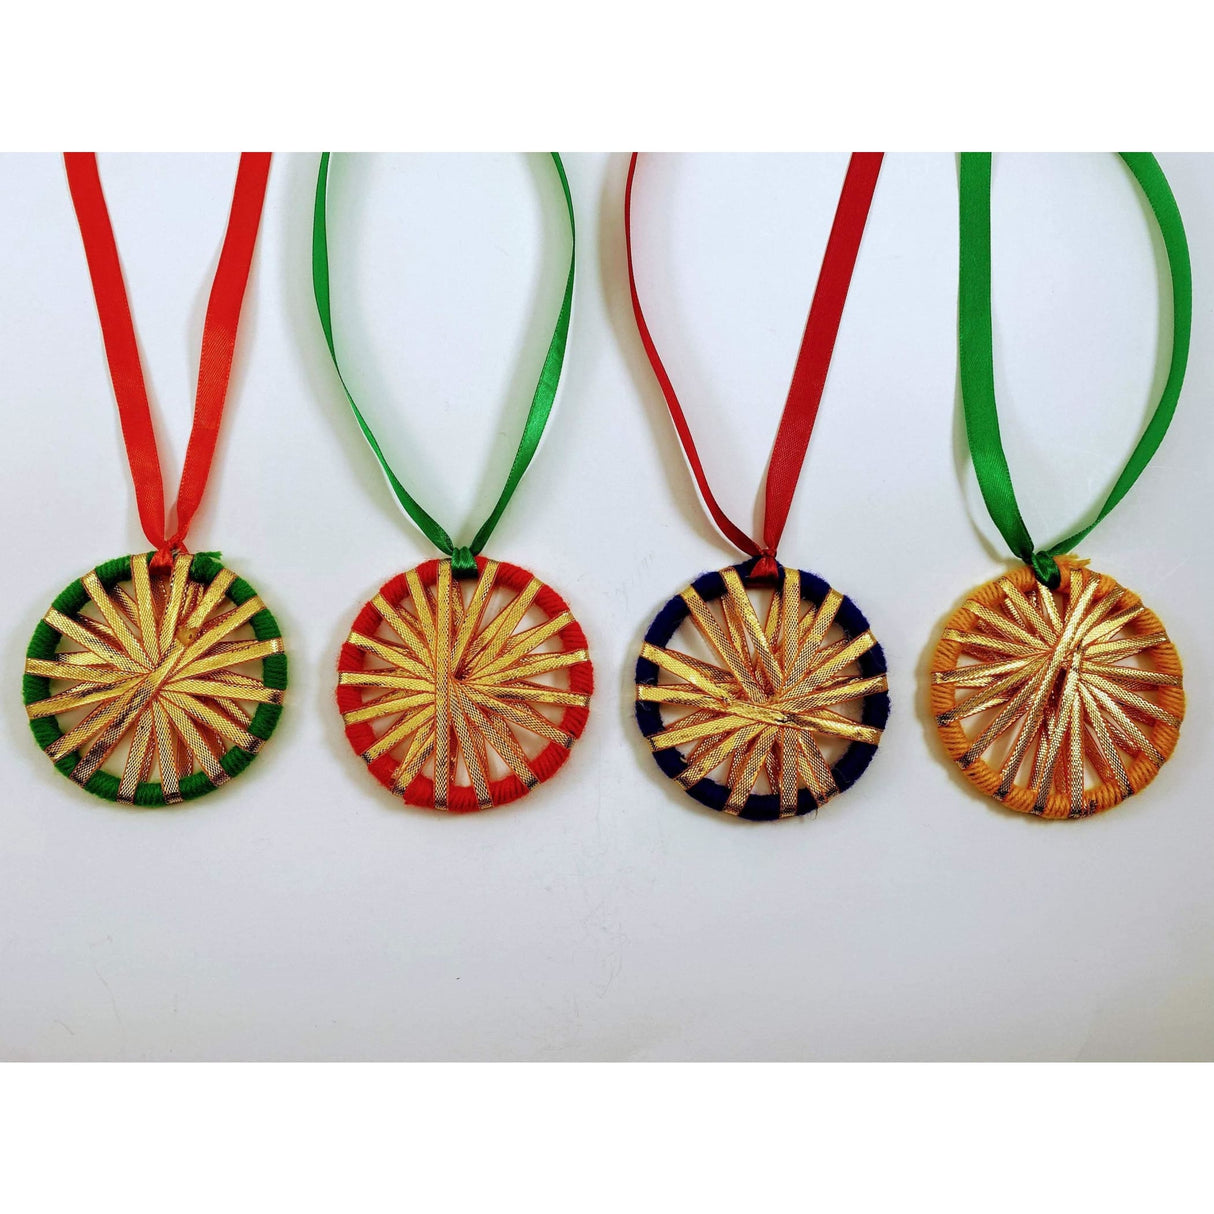 Set of 4 christmas tree ornament with satin ribbon ties